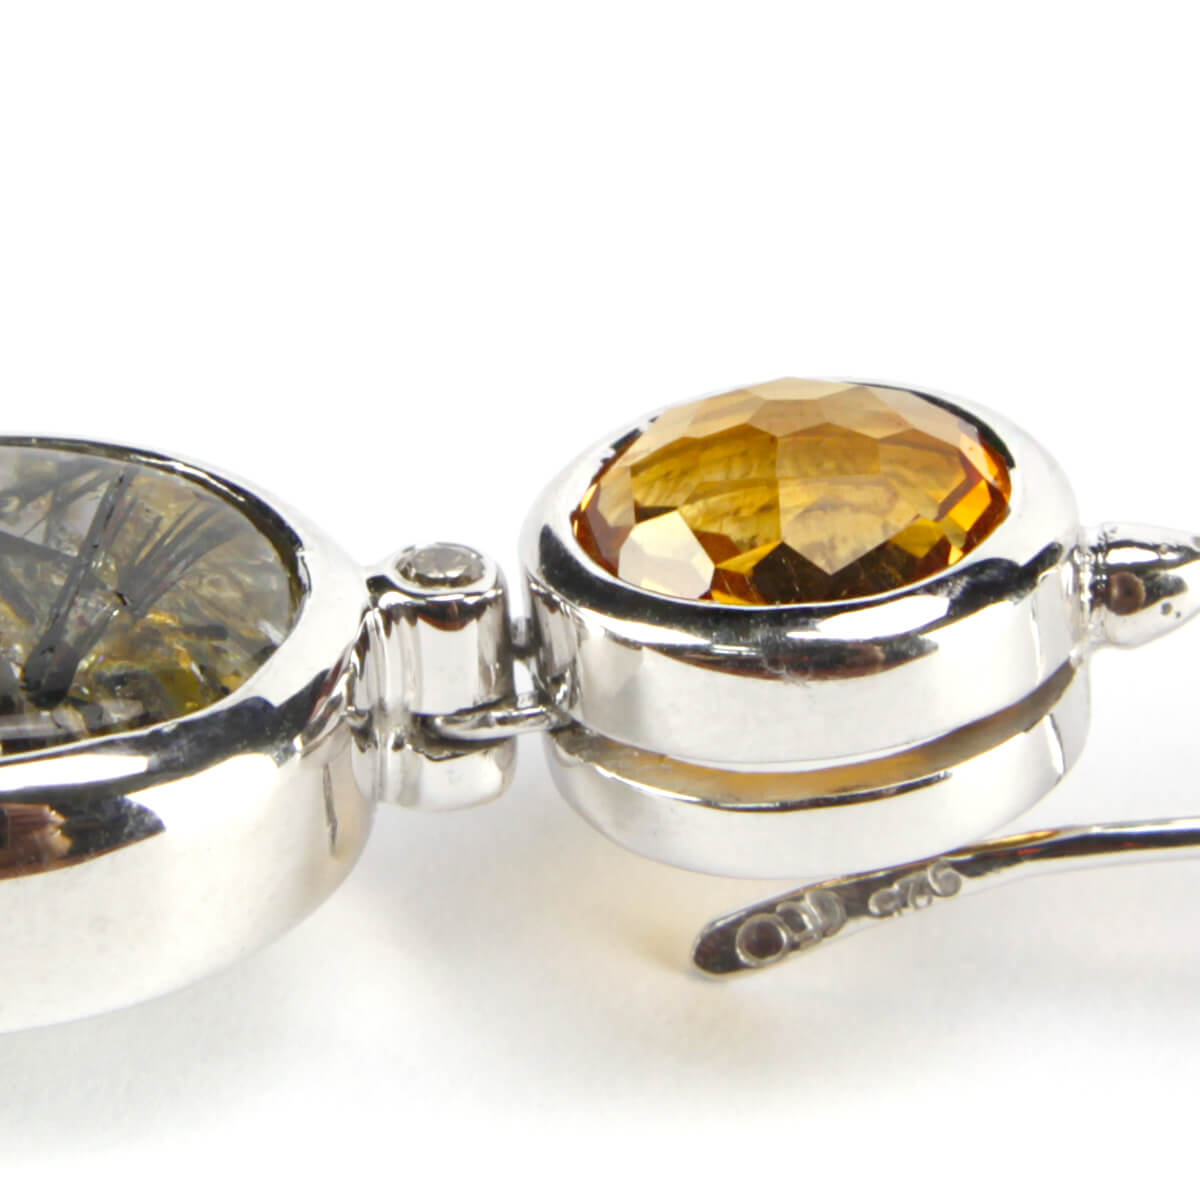 Tourmaline Quartz, Citrine Quartz and Diamond Earrings